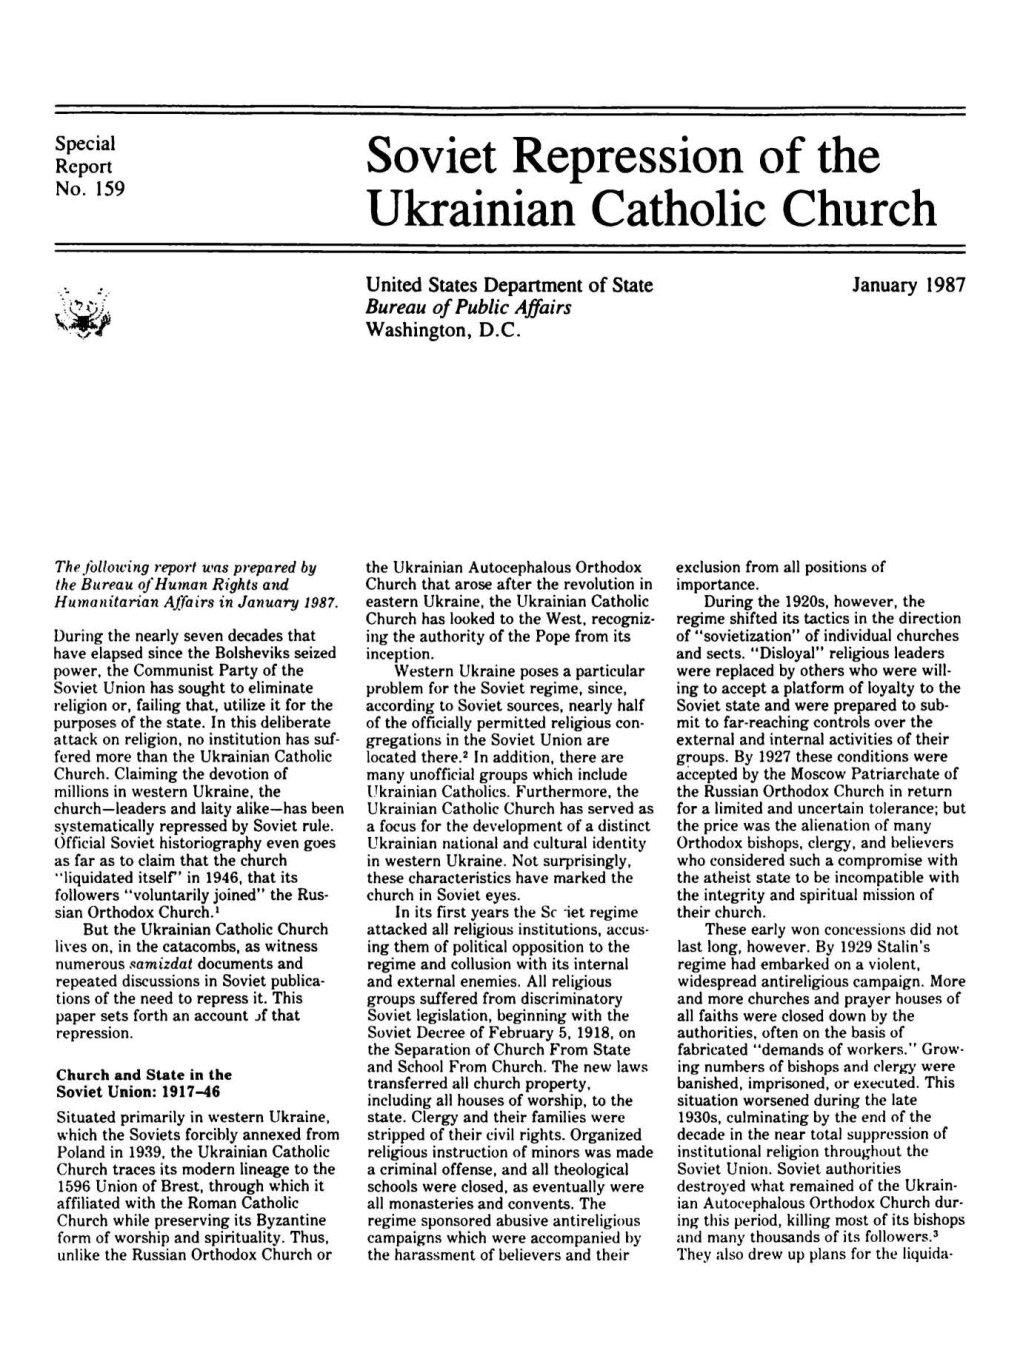 Soviet Repression of the Ukrainian Catholic Church